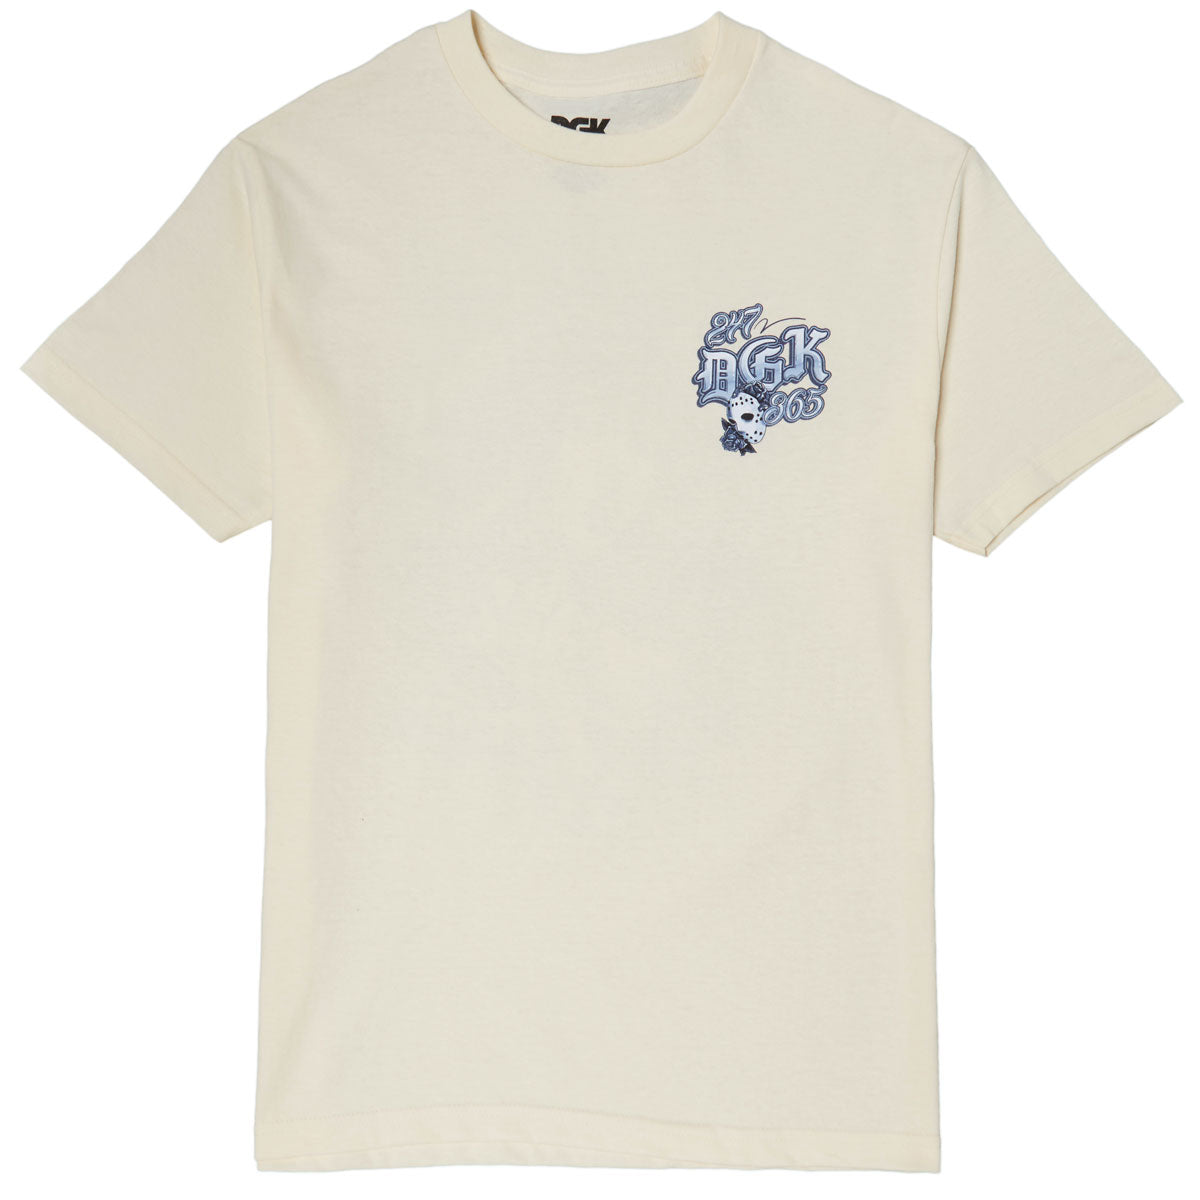 DGK Hyna T-Shirt - Cream image 2